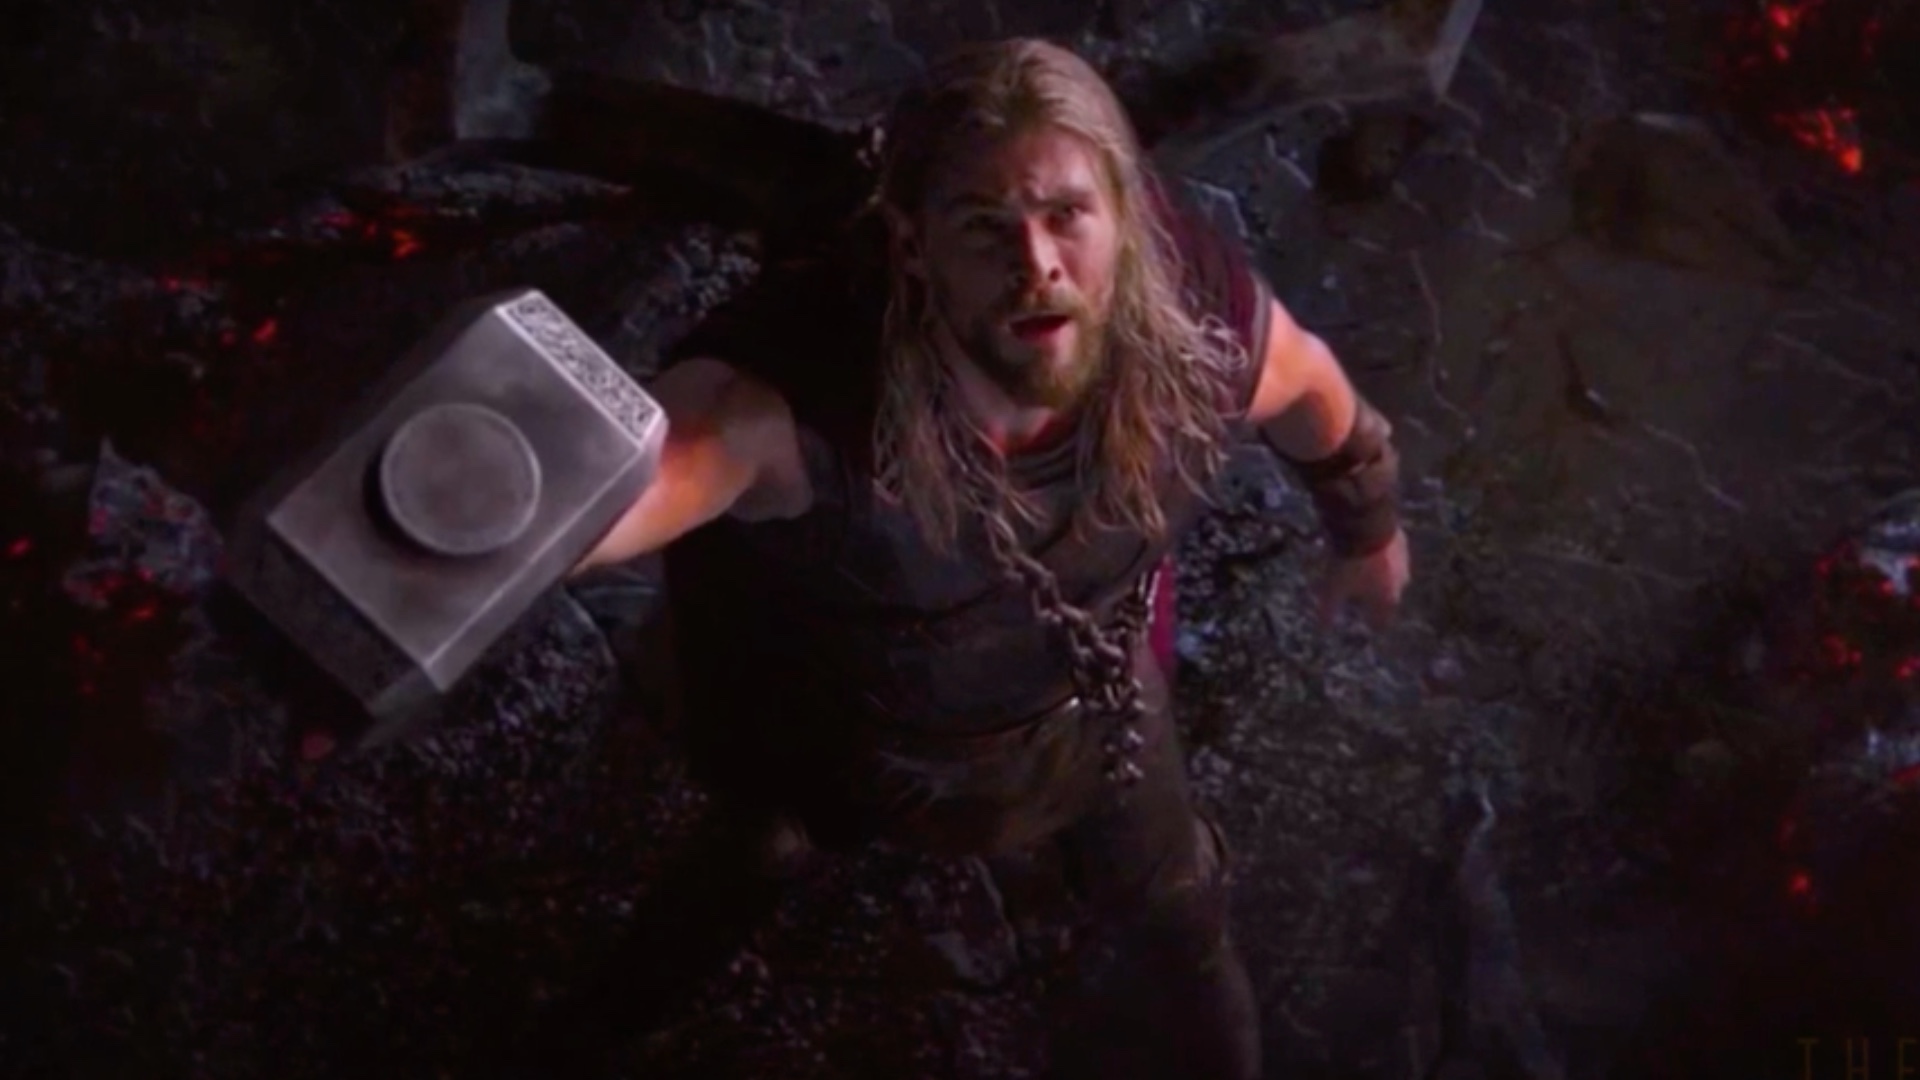 Thor: Ragnarok' Trailer: Comic-Con Sees New Footage [VIDEO]